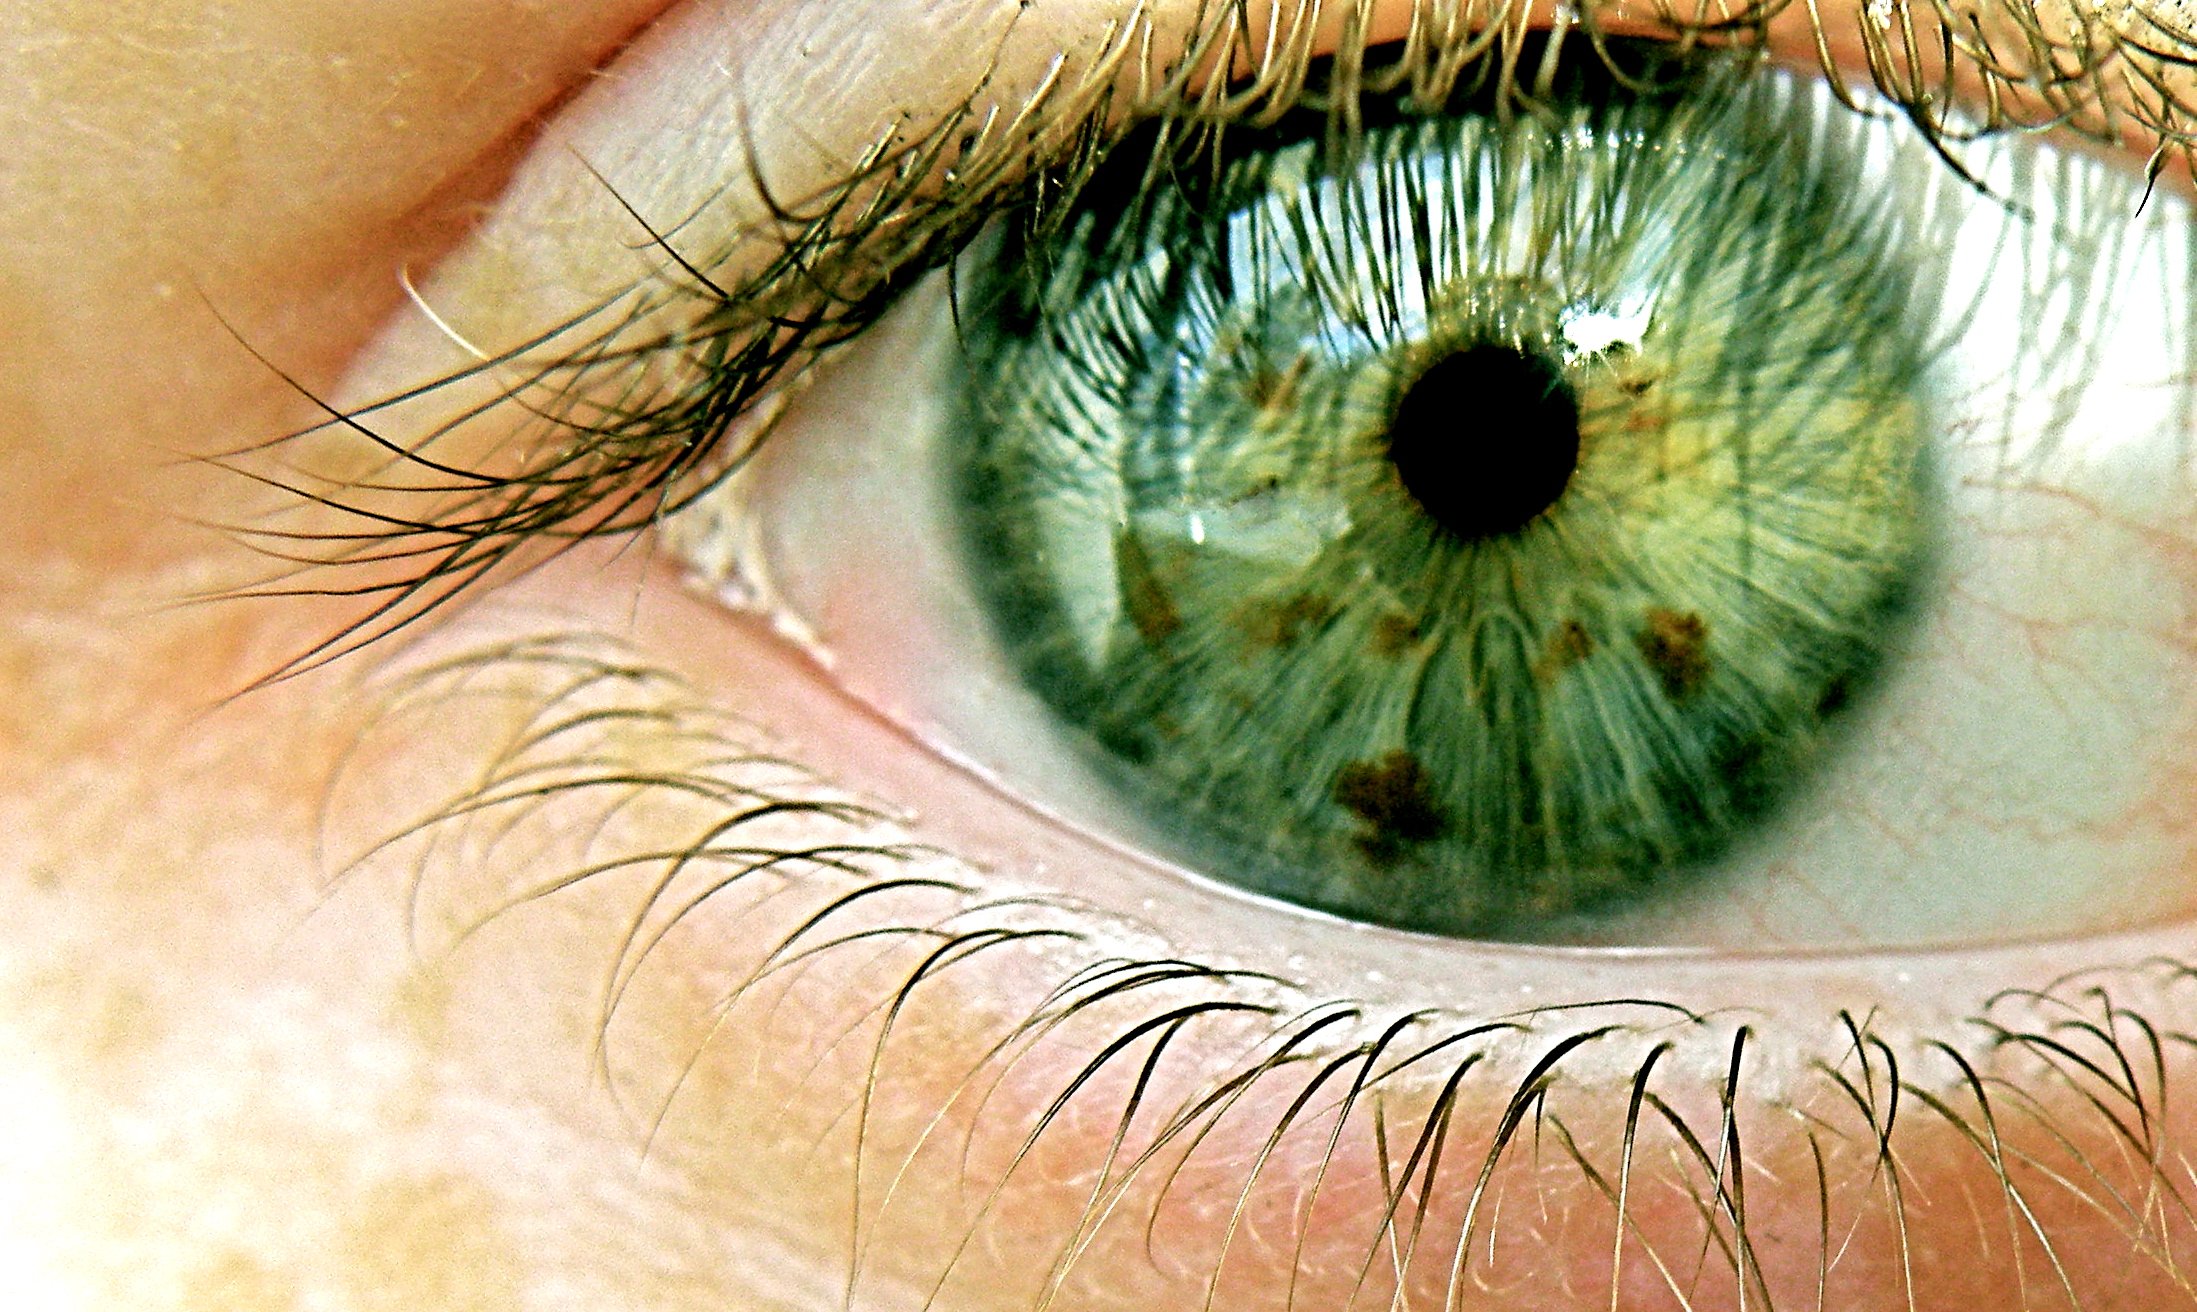 He got green eyes. Чисто зеленый цвет глаз. Изумрудно зеленый цвет глаз. Желто зеленые глаза. Зелено карие глаза.